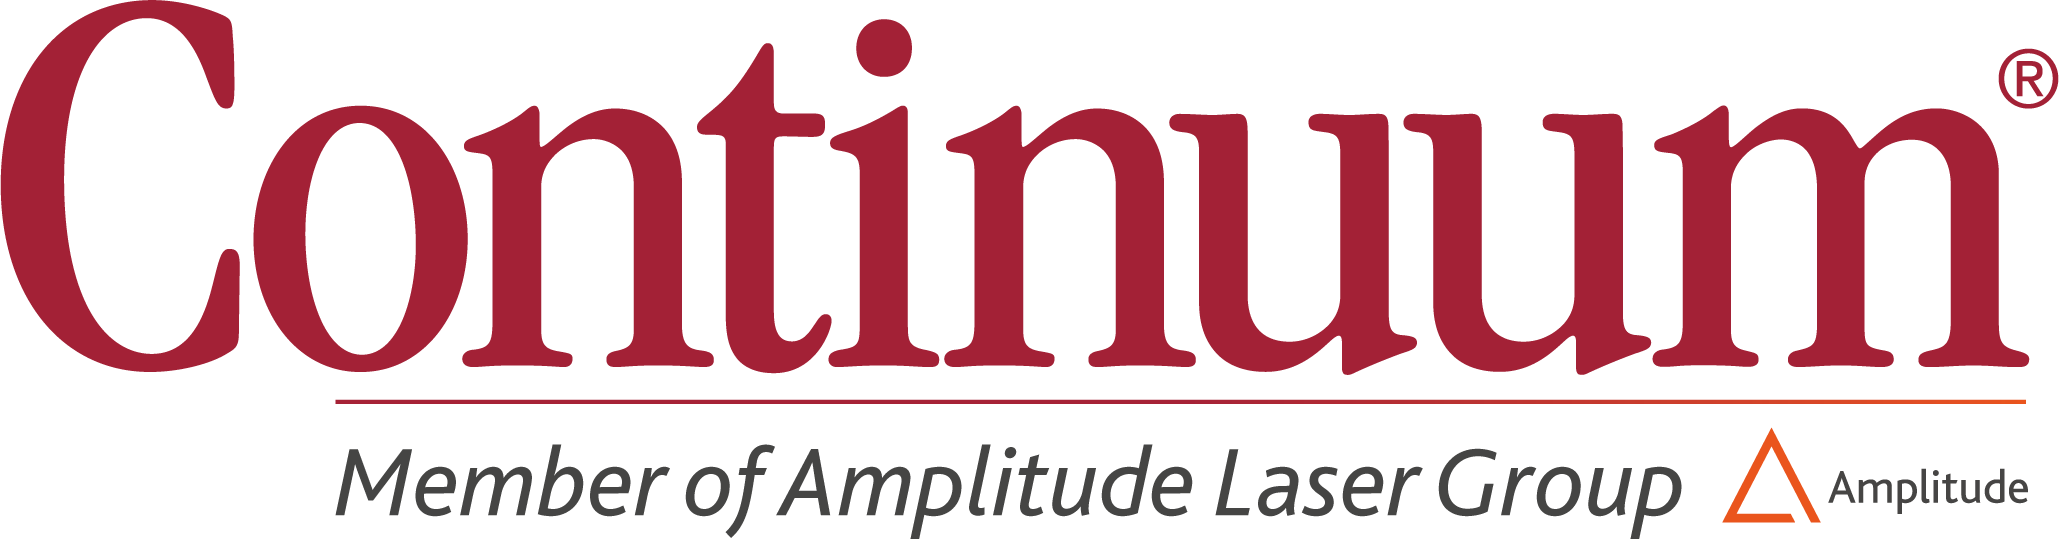 Continuum - Member of Amplitude Laser Group